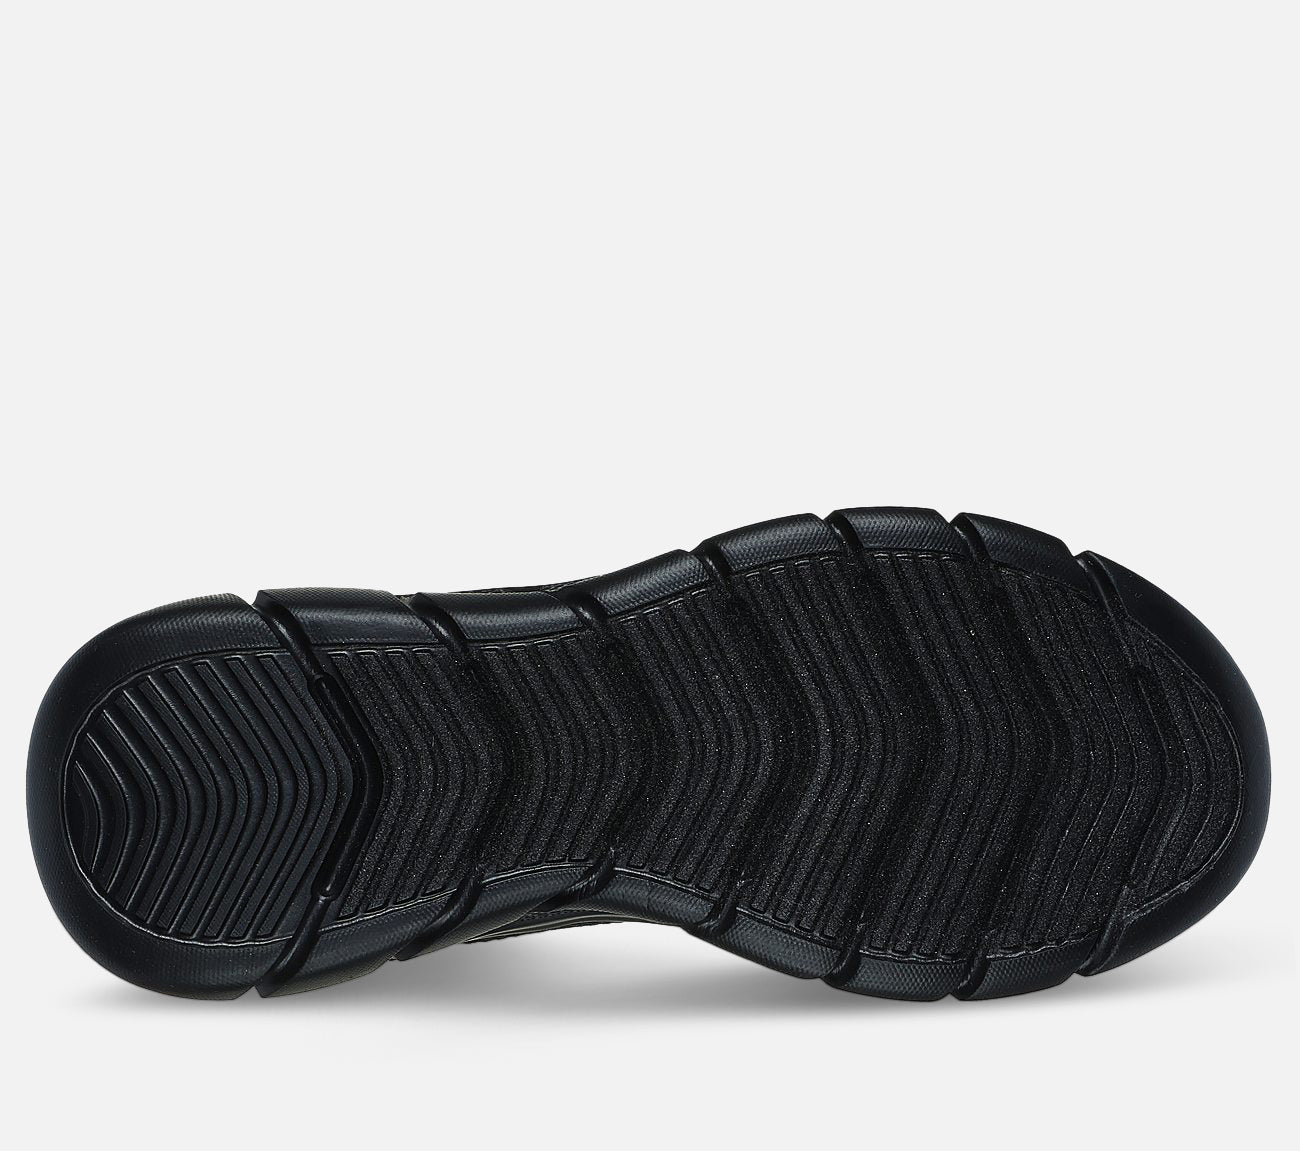 BOBS B Flex - Visionary Essence Shoe Skechers